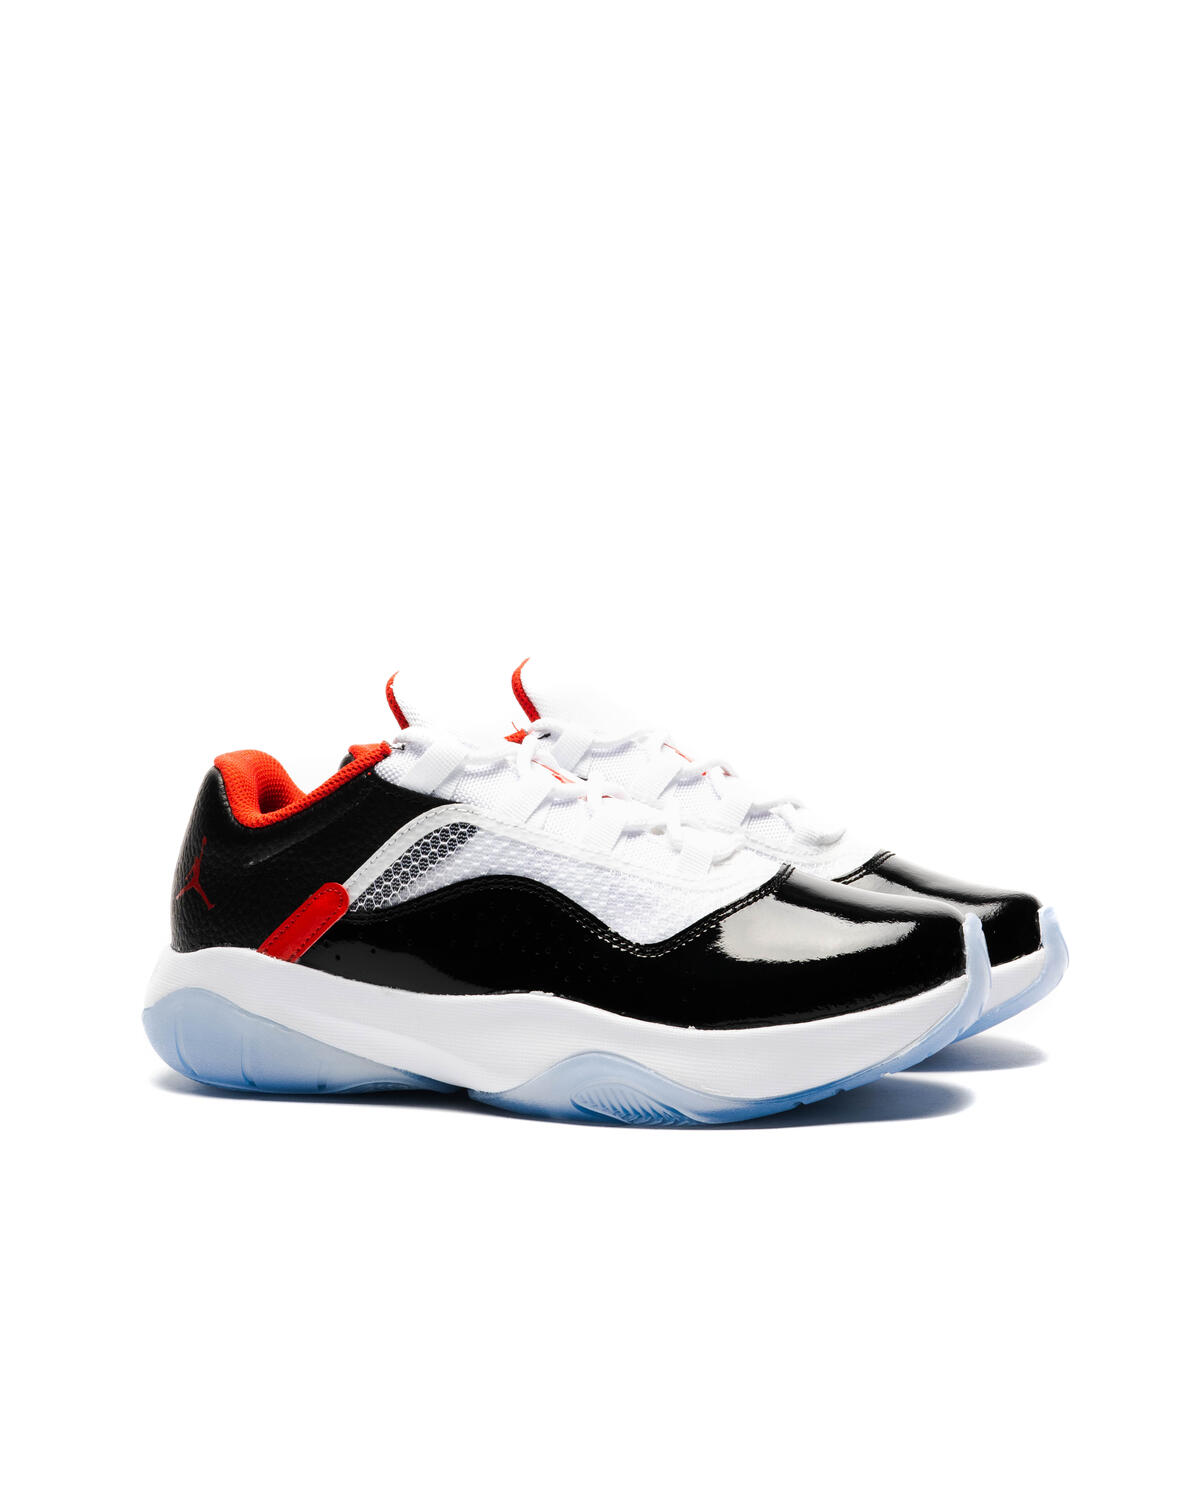 Michael Jordan Chris Paul Men’s Shoes Sneakers, Size US 9.5, Red White Black